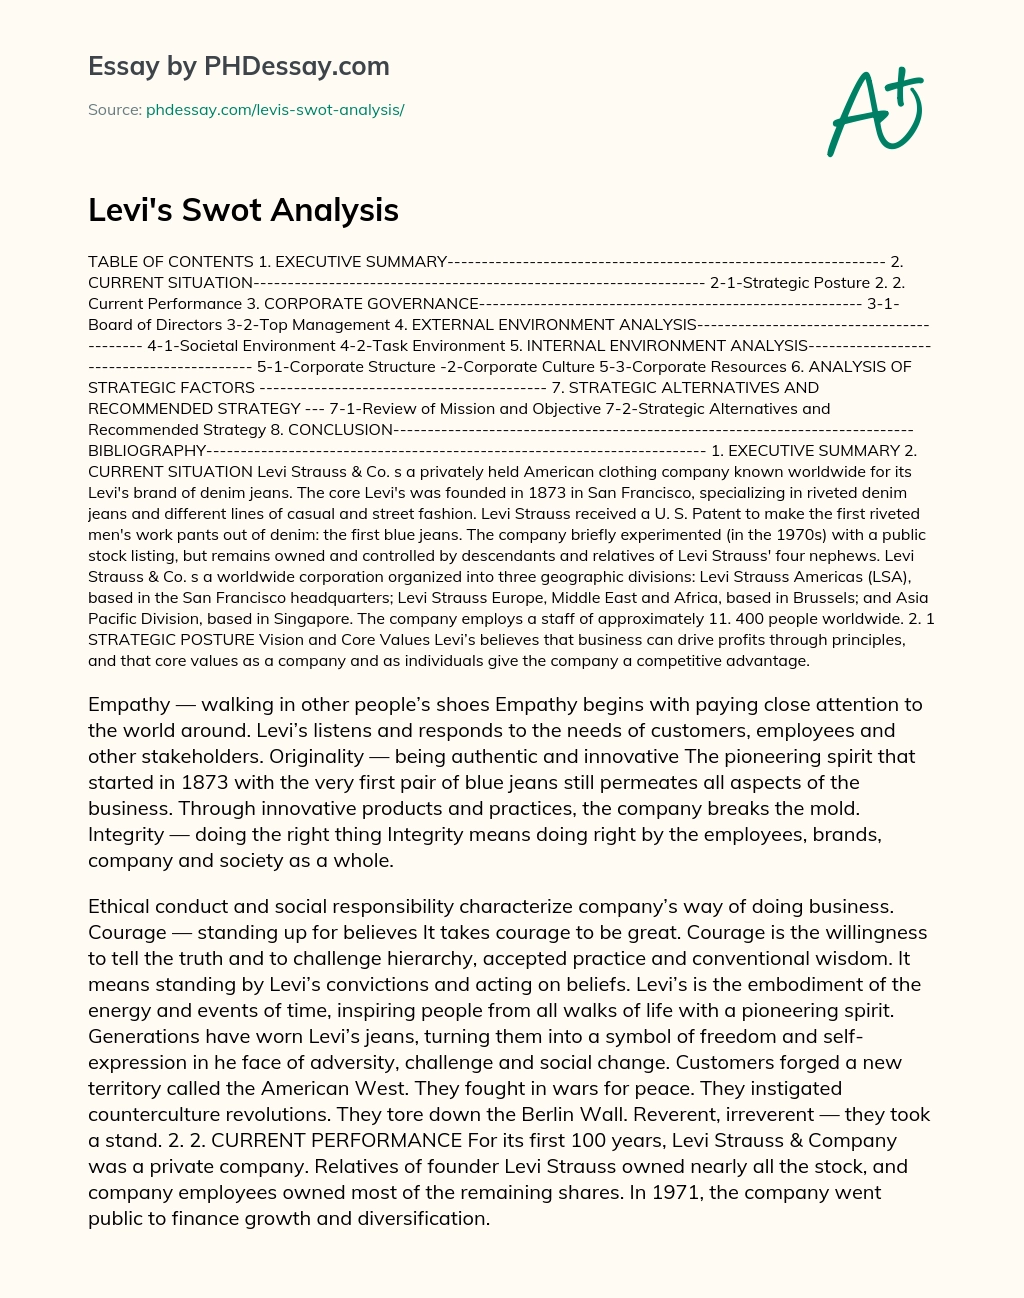 Levi's Swot Analysis 